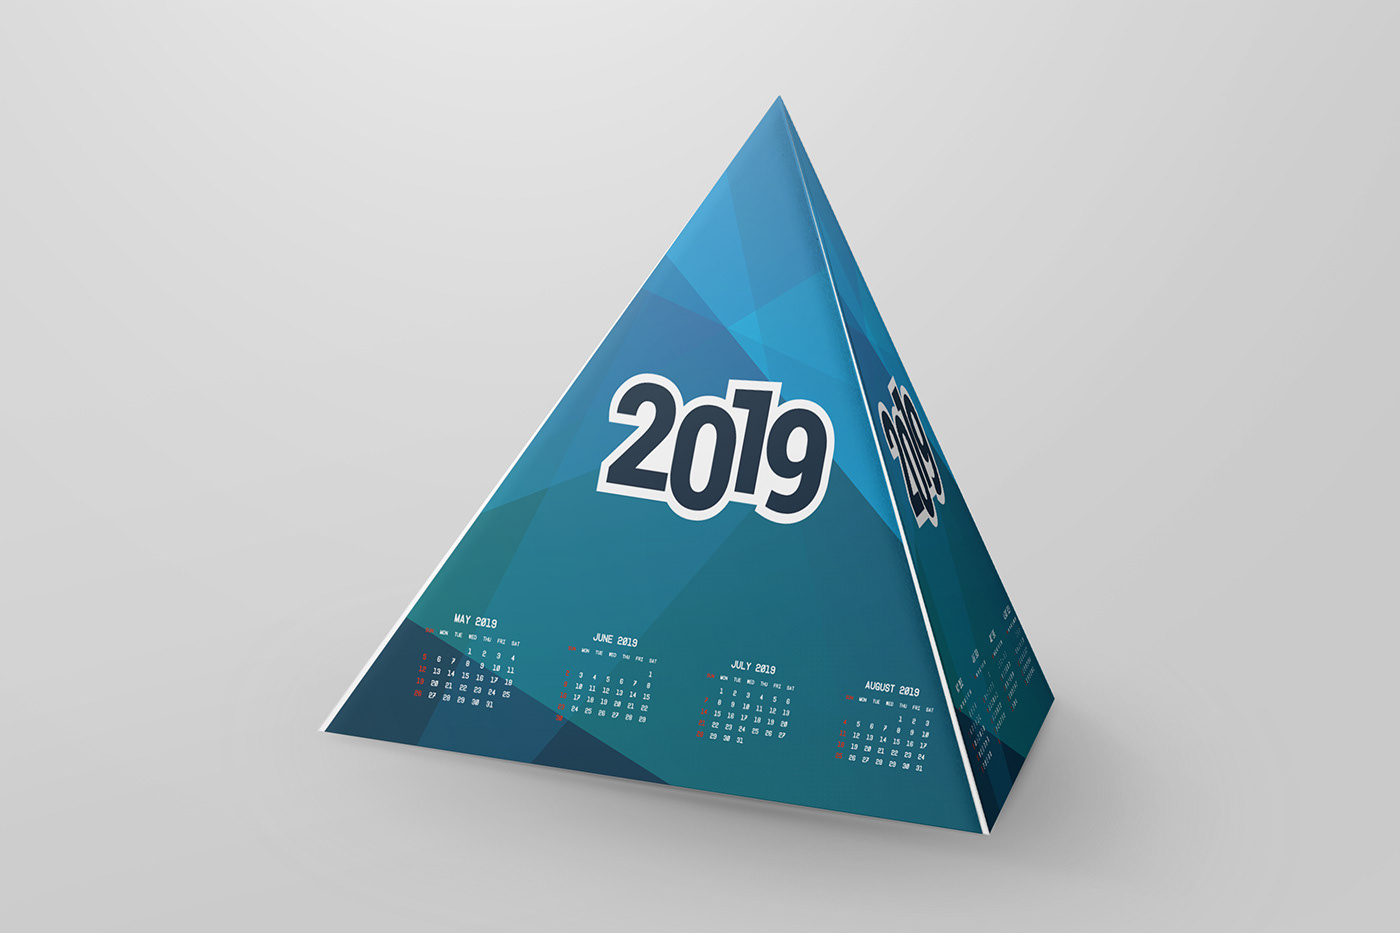 2019 design calendar design idea calendar 2019 Asm Arif Design Inspiration calendar design inspiration 2019 calendar